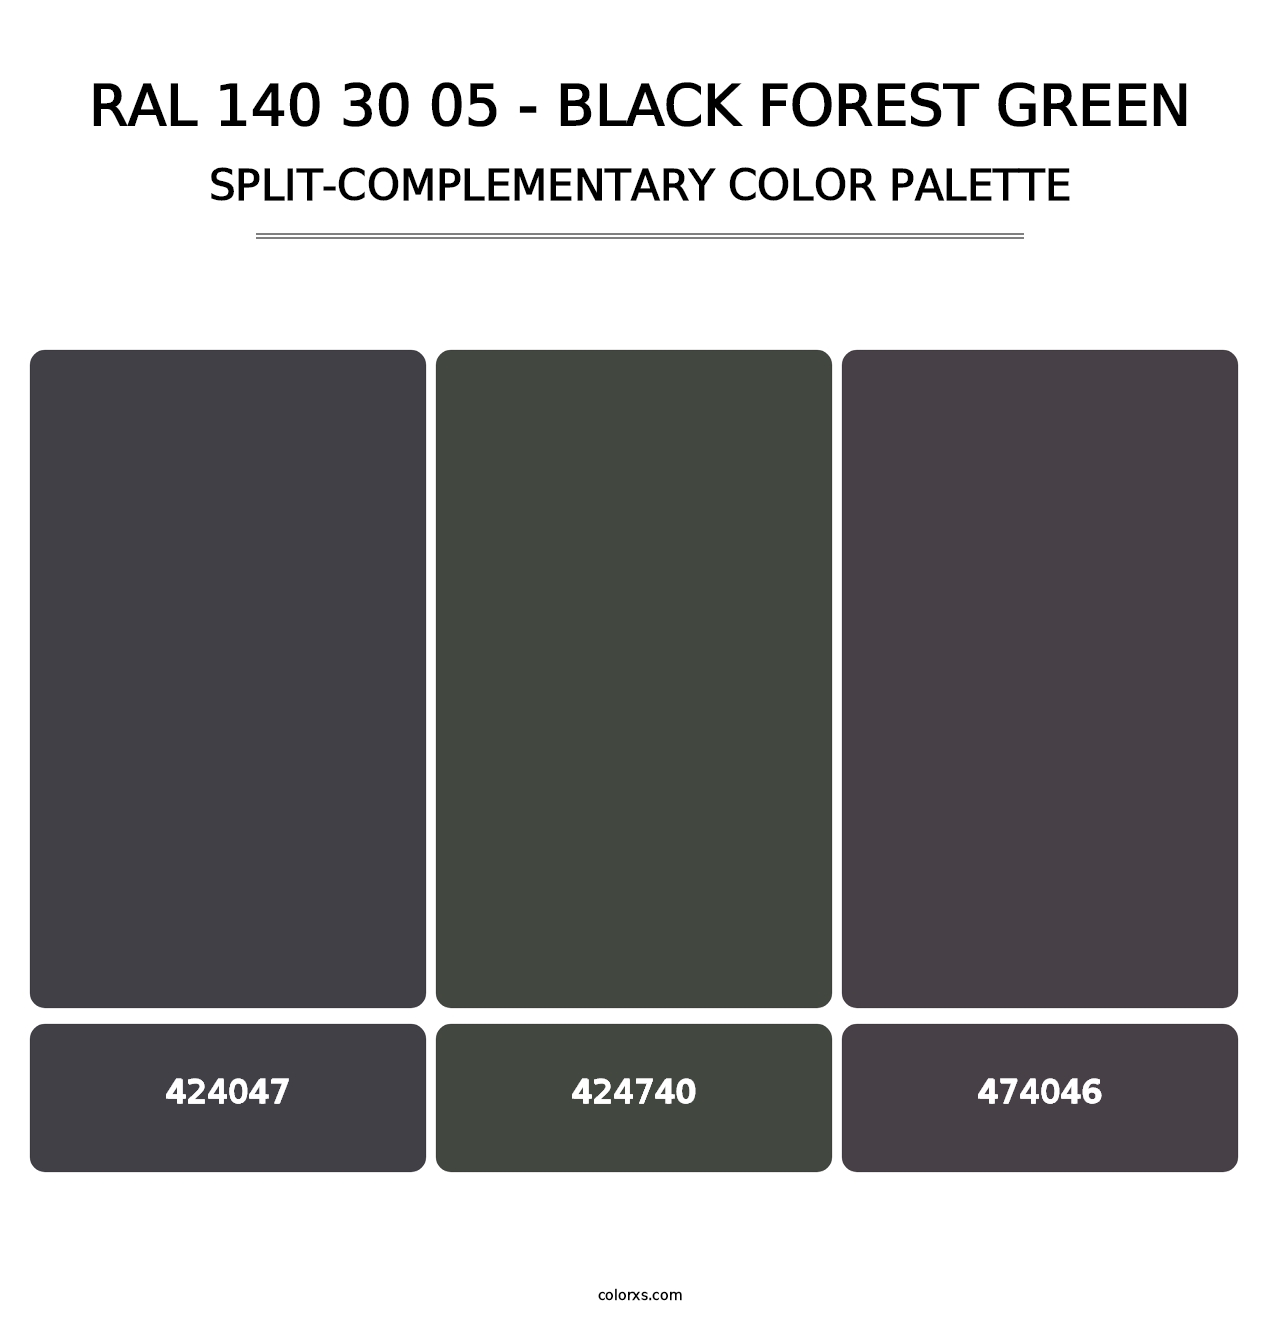 RAL 140 30 05 - Black Forest Green - Split-Complementary Color Palette